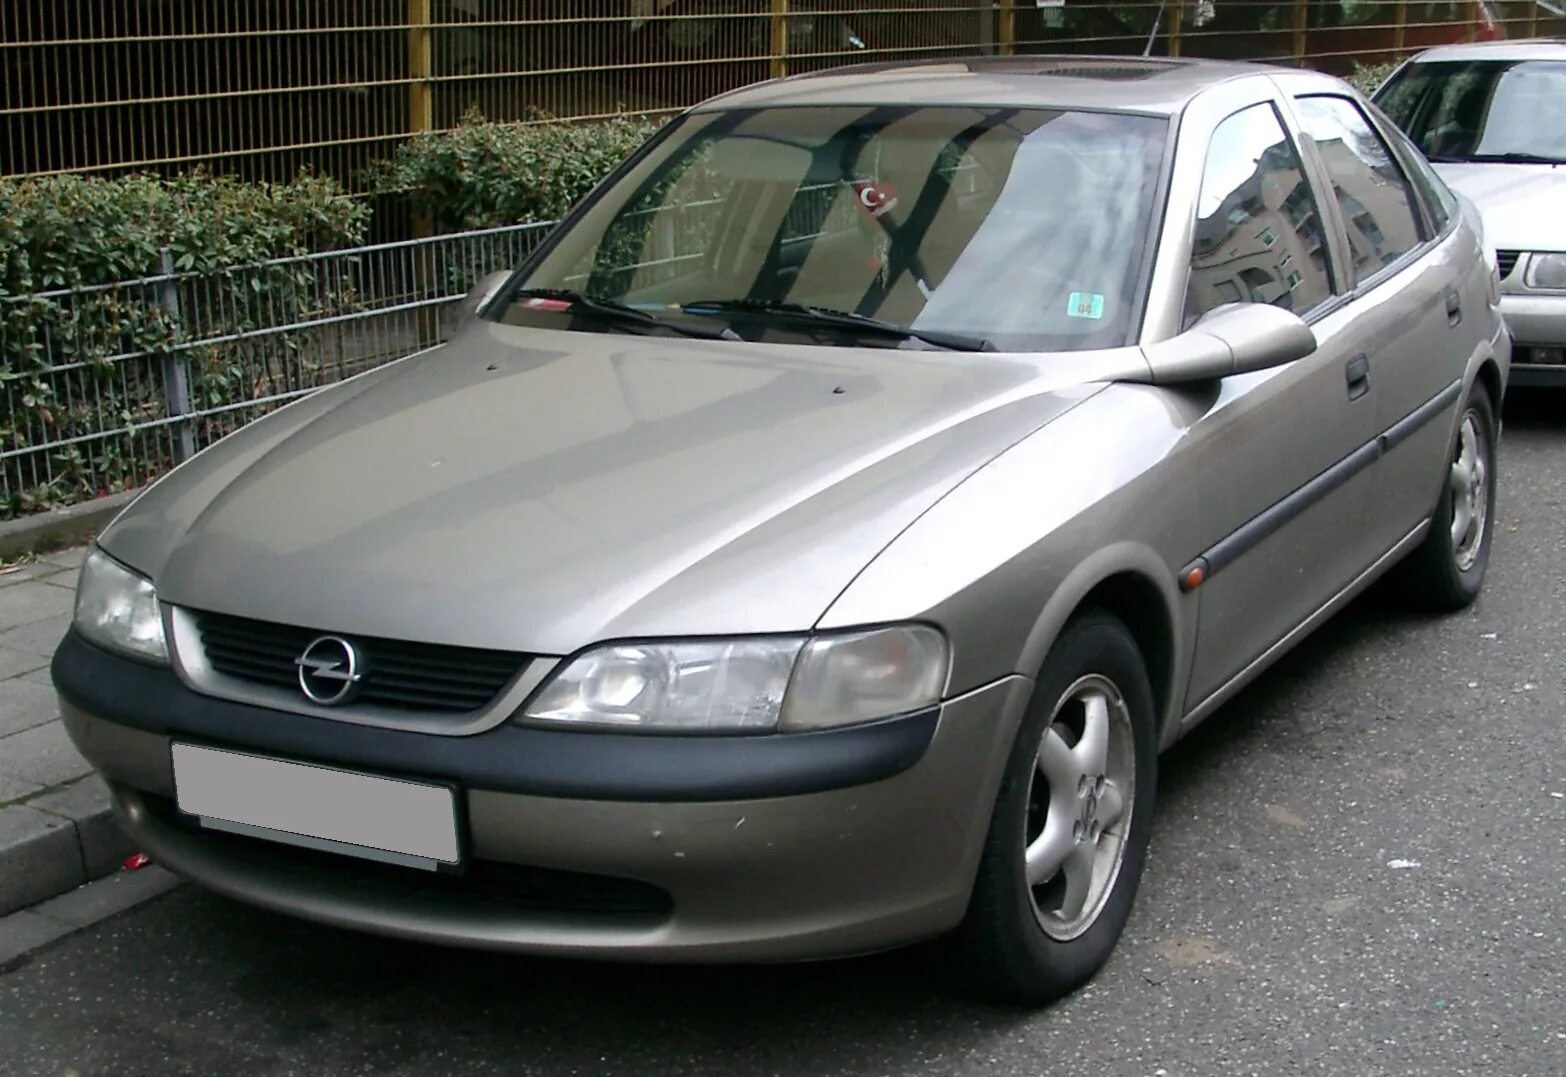 Opel Vectra b. Opel Vectra b 1999-2002. Опель Вектра 2 1996. Опель Вектра 1.6 1996.